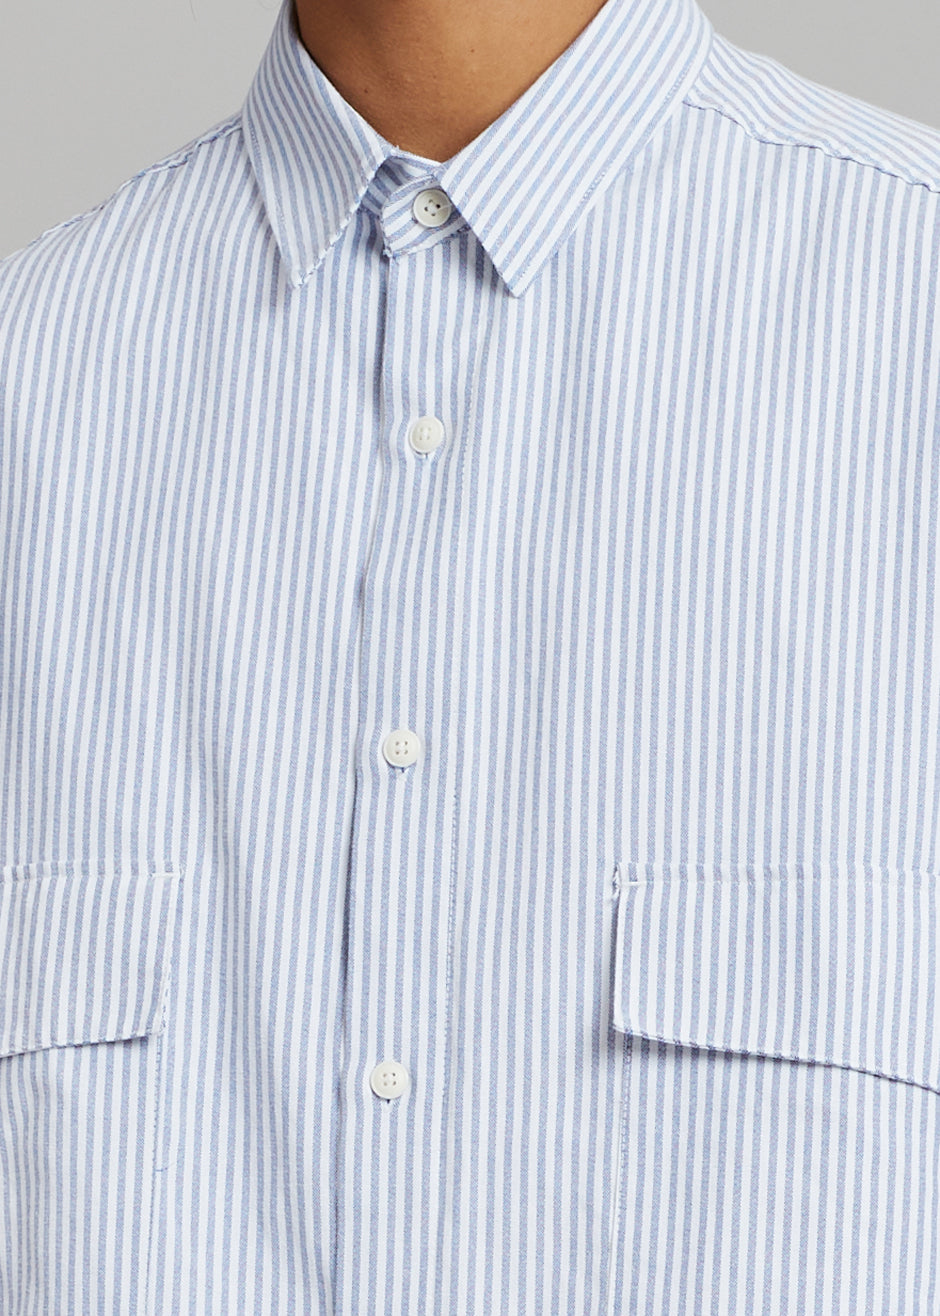 Ethan Pocket Shirt - Blue Stripe - 4